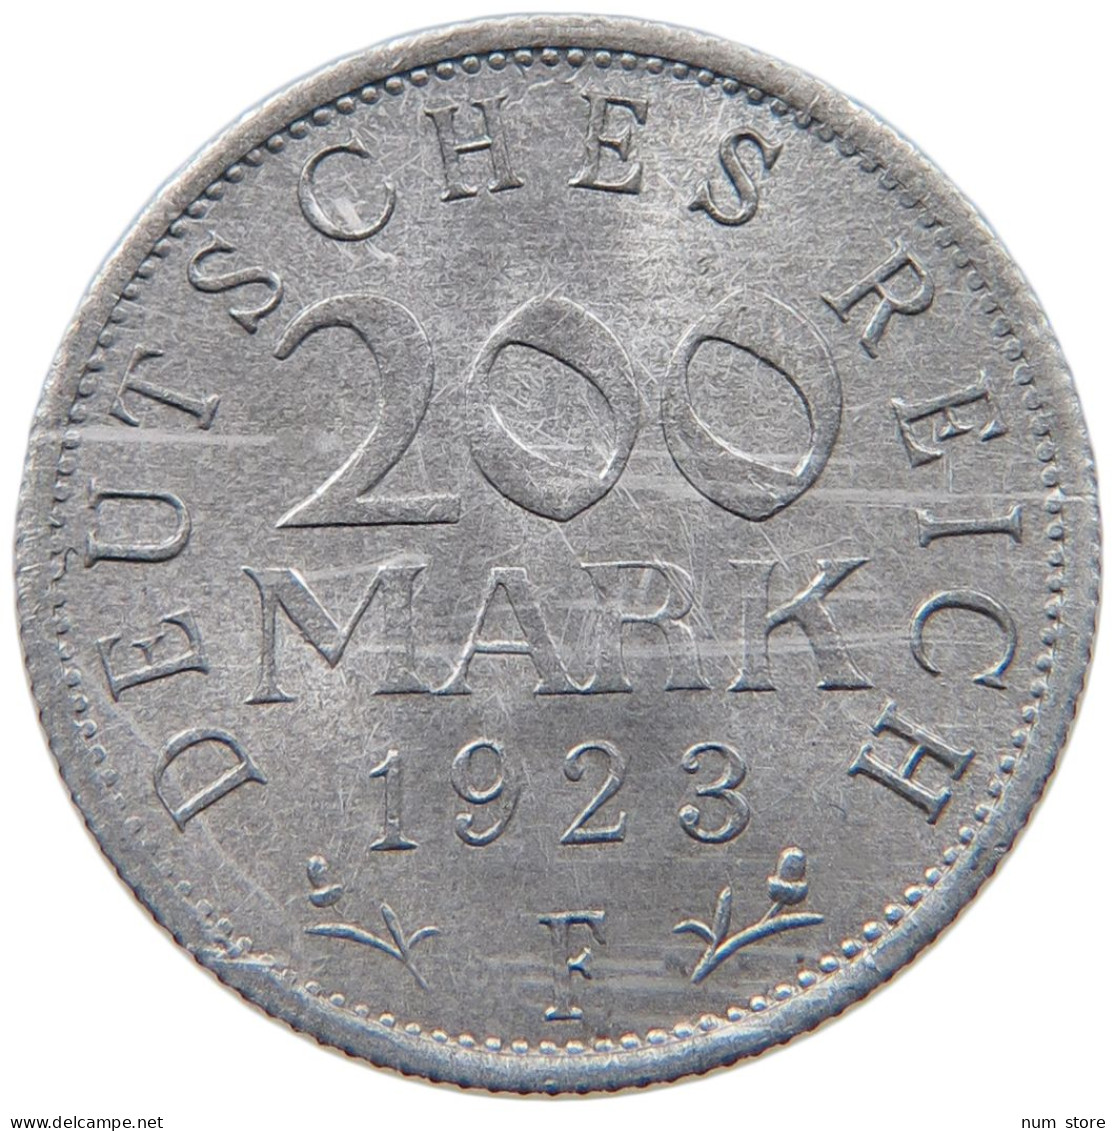 WEIMARER REPUBLIK 200 MARK 1923 F  #MA 098775 - 200 & 500 Mark